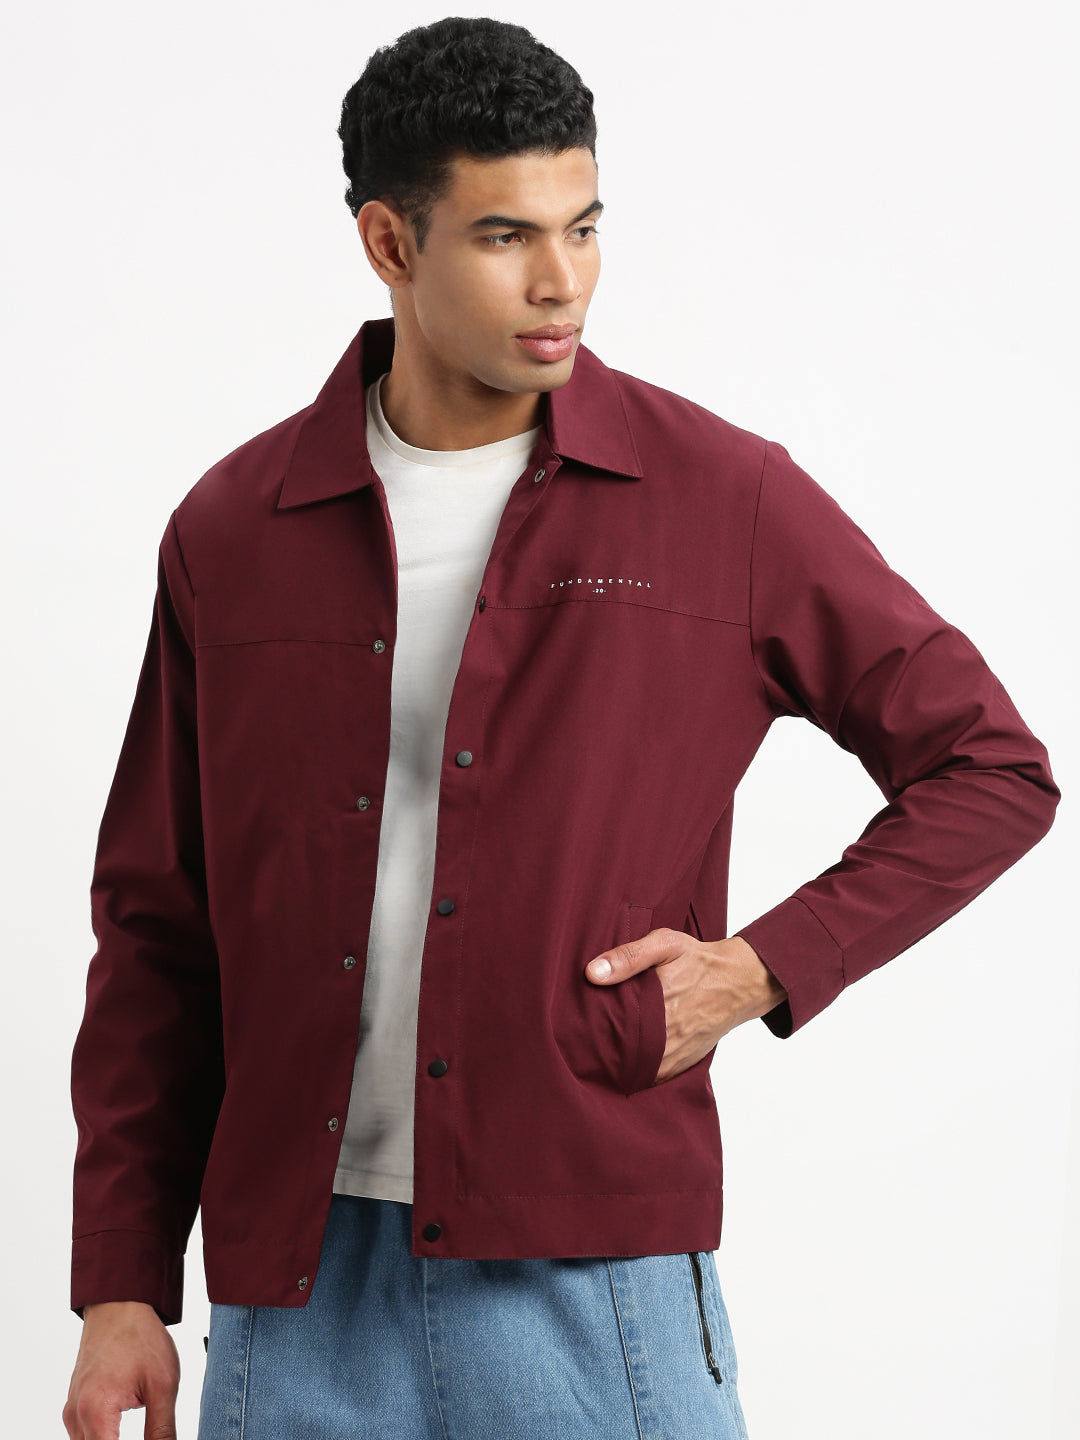 Men Spread Collar Purple Solid Tailored Jacket